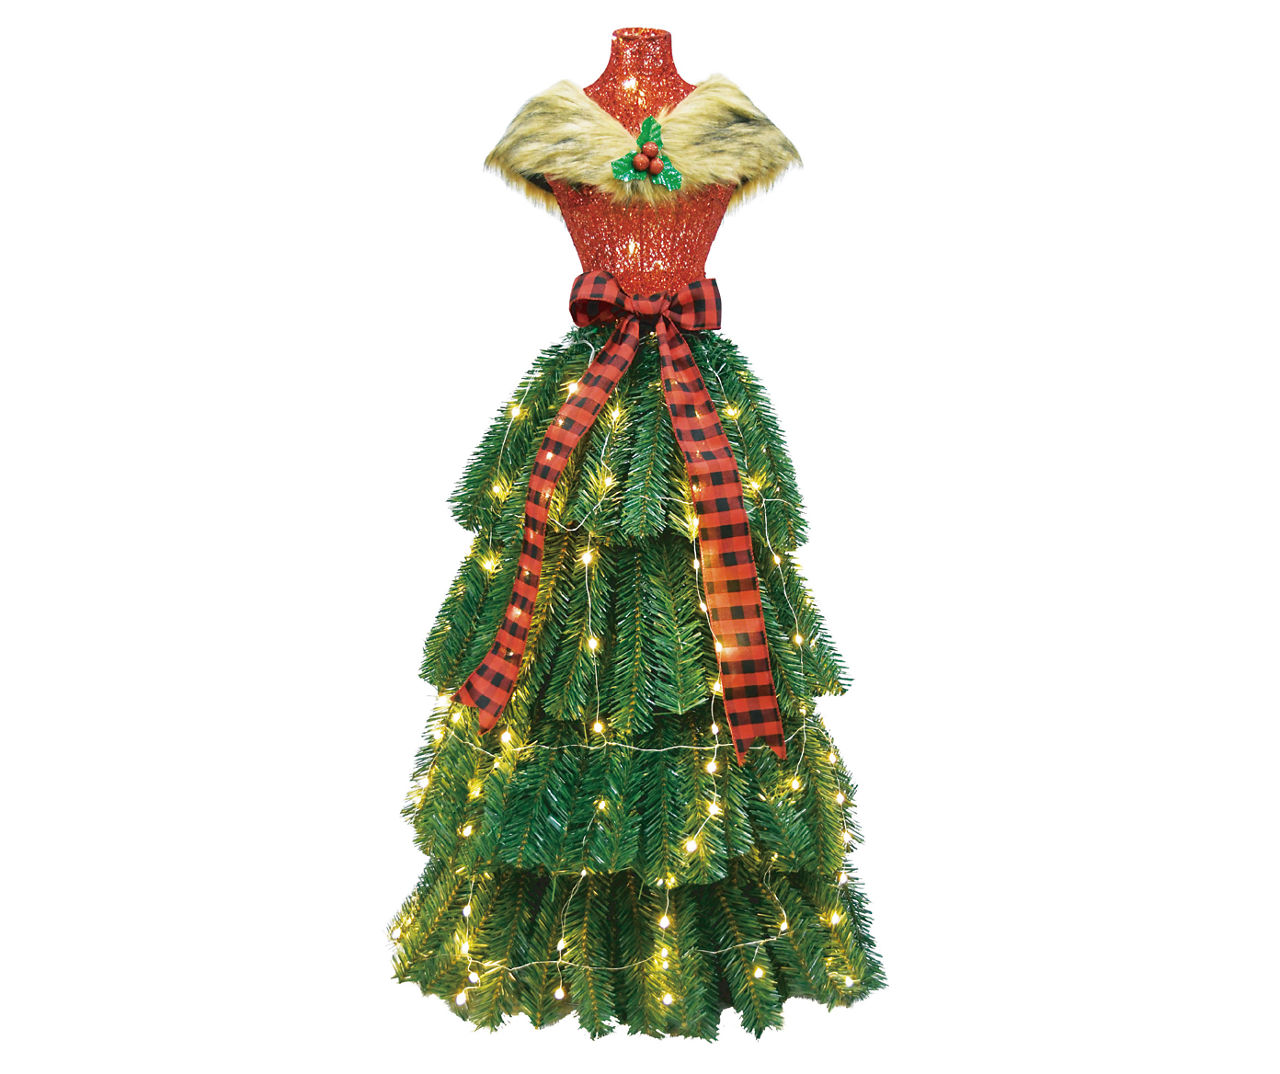 Christmas Tree dress form